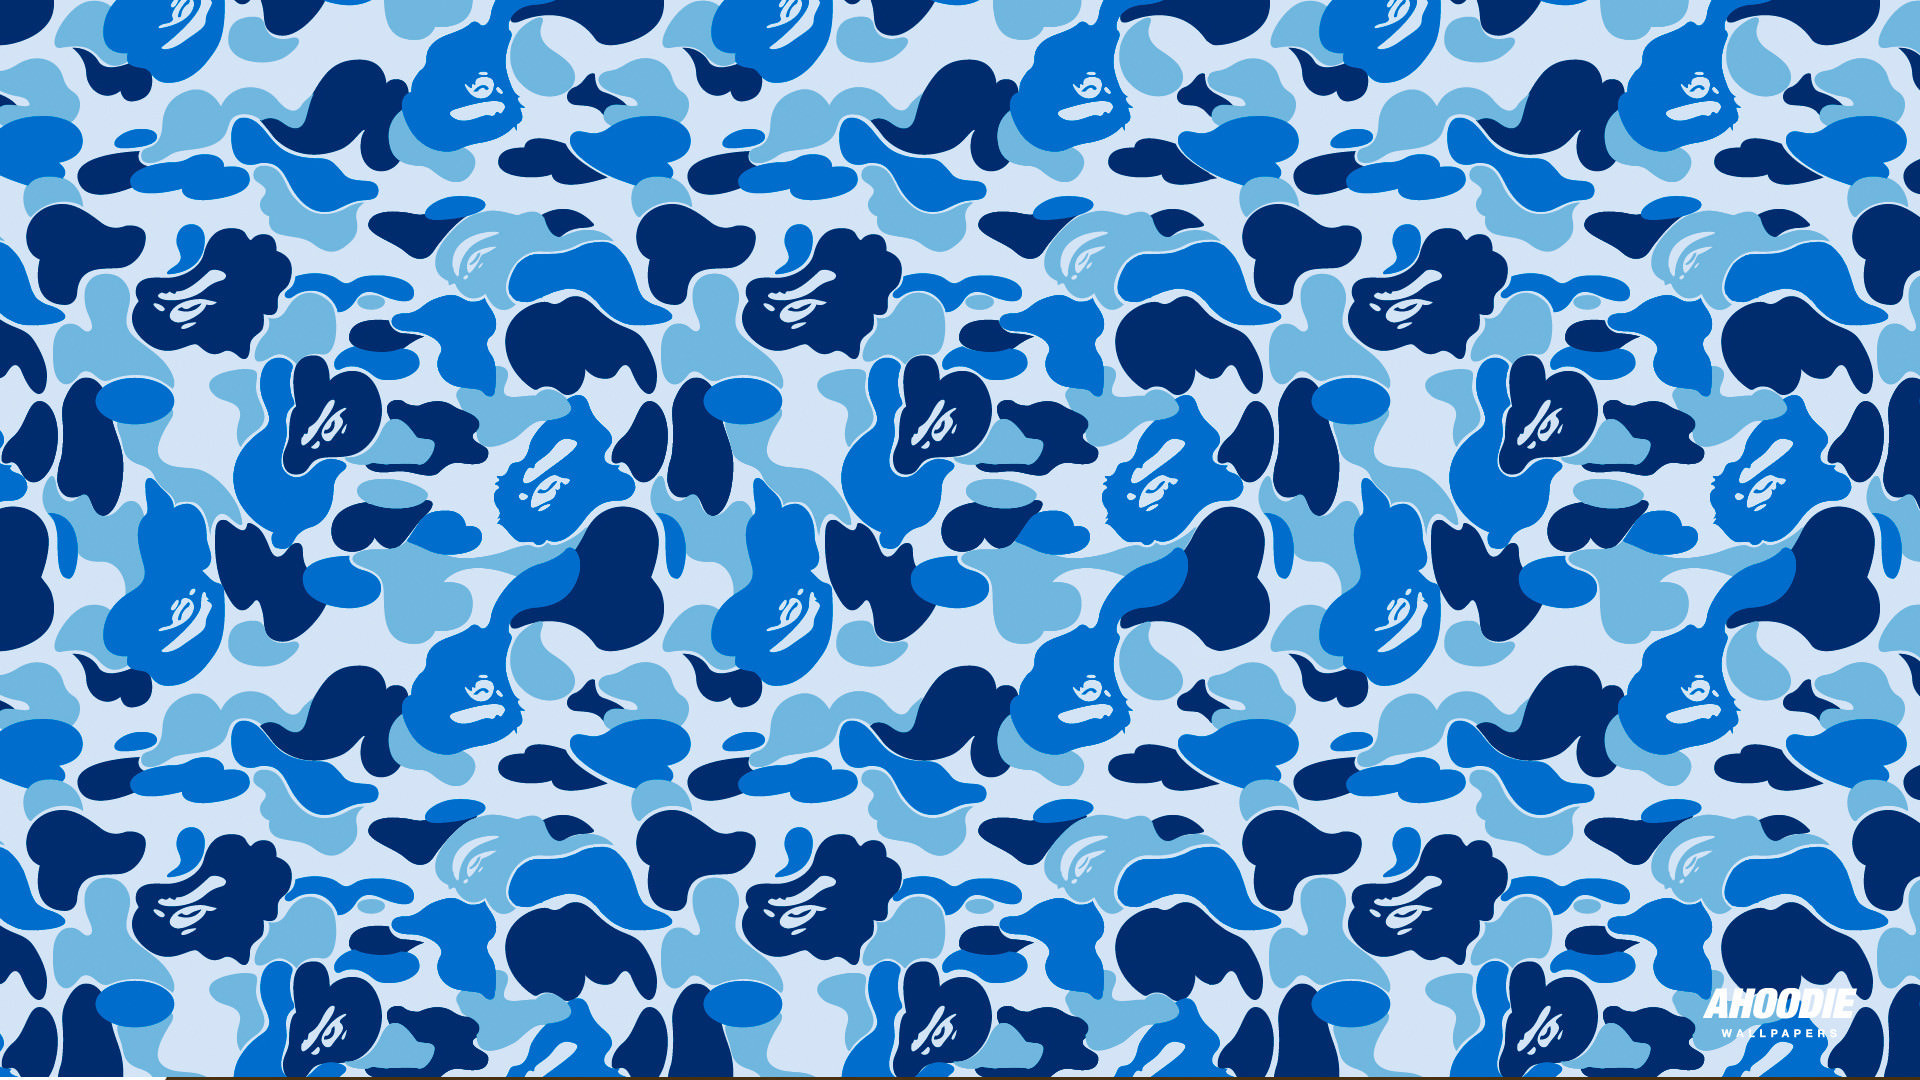 1080p 4k hd wallpapers for iphone 6: Blue Bape Camo Wallpaper